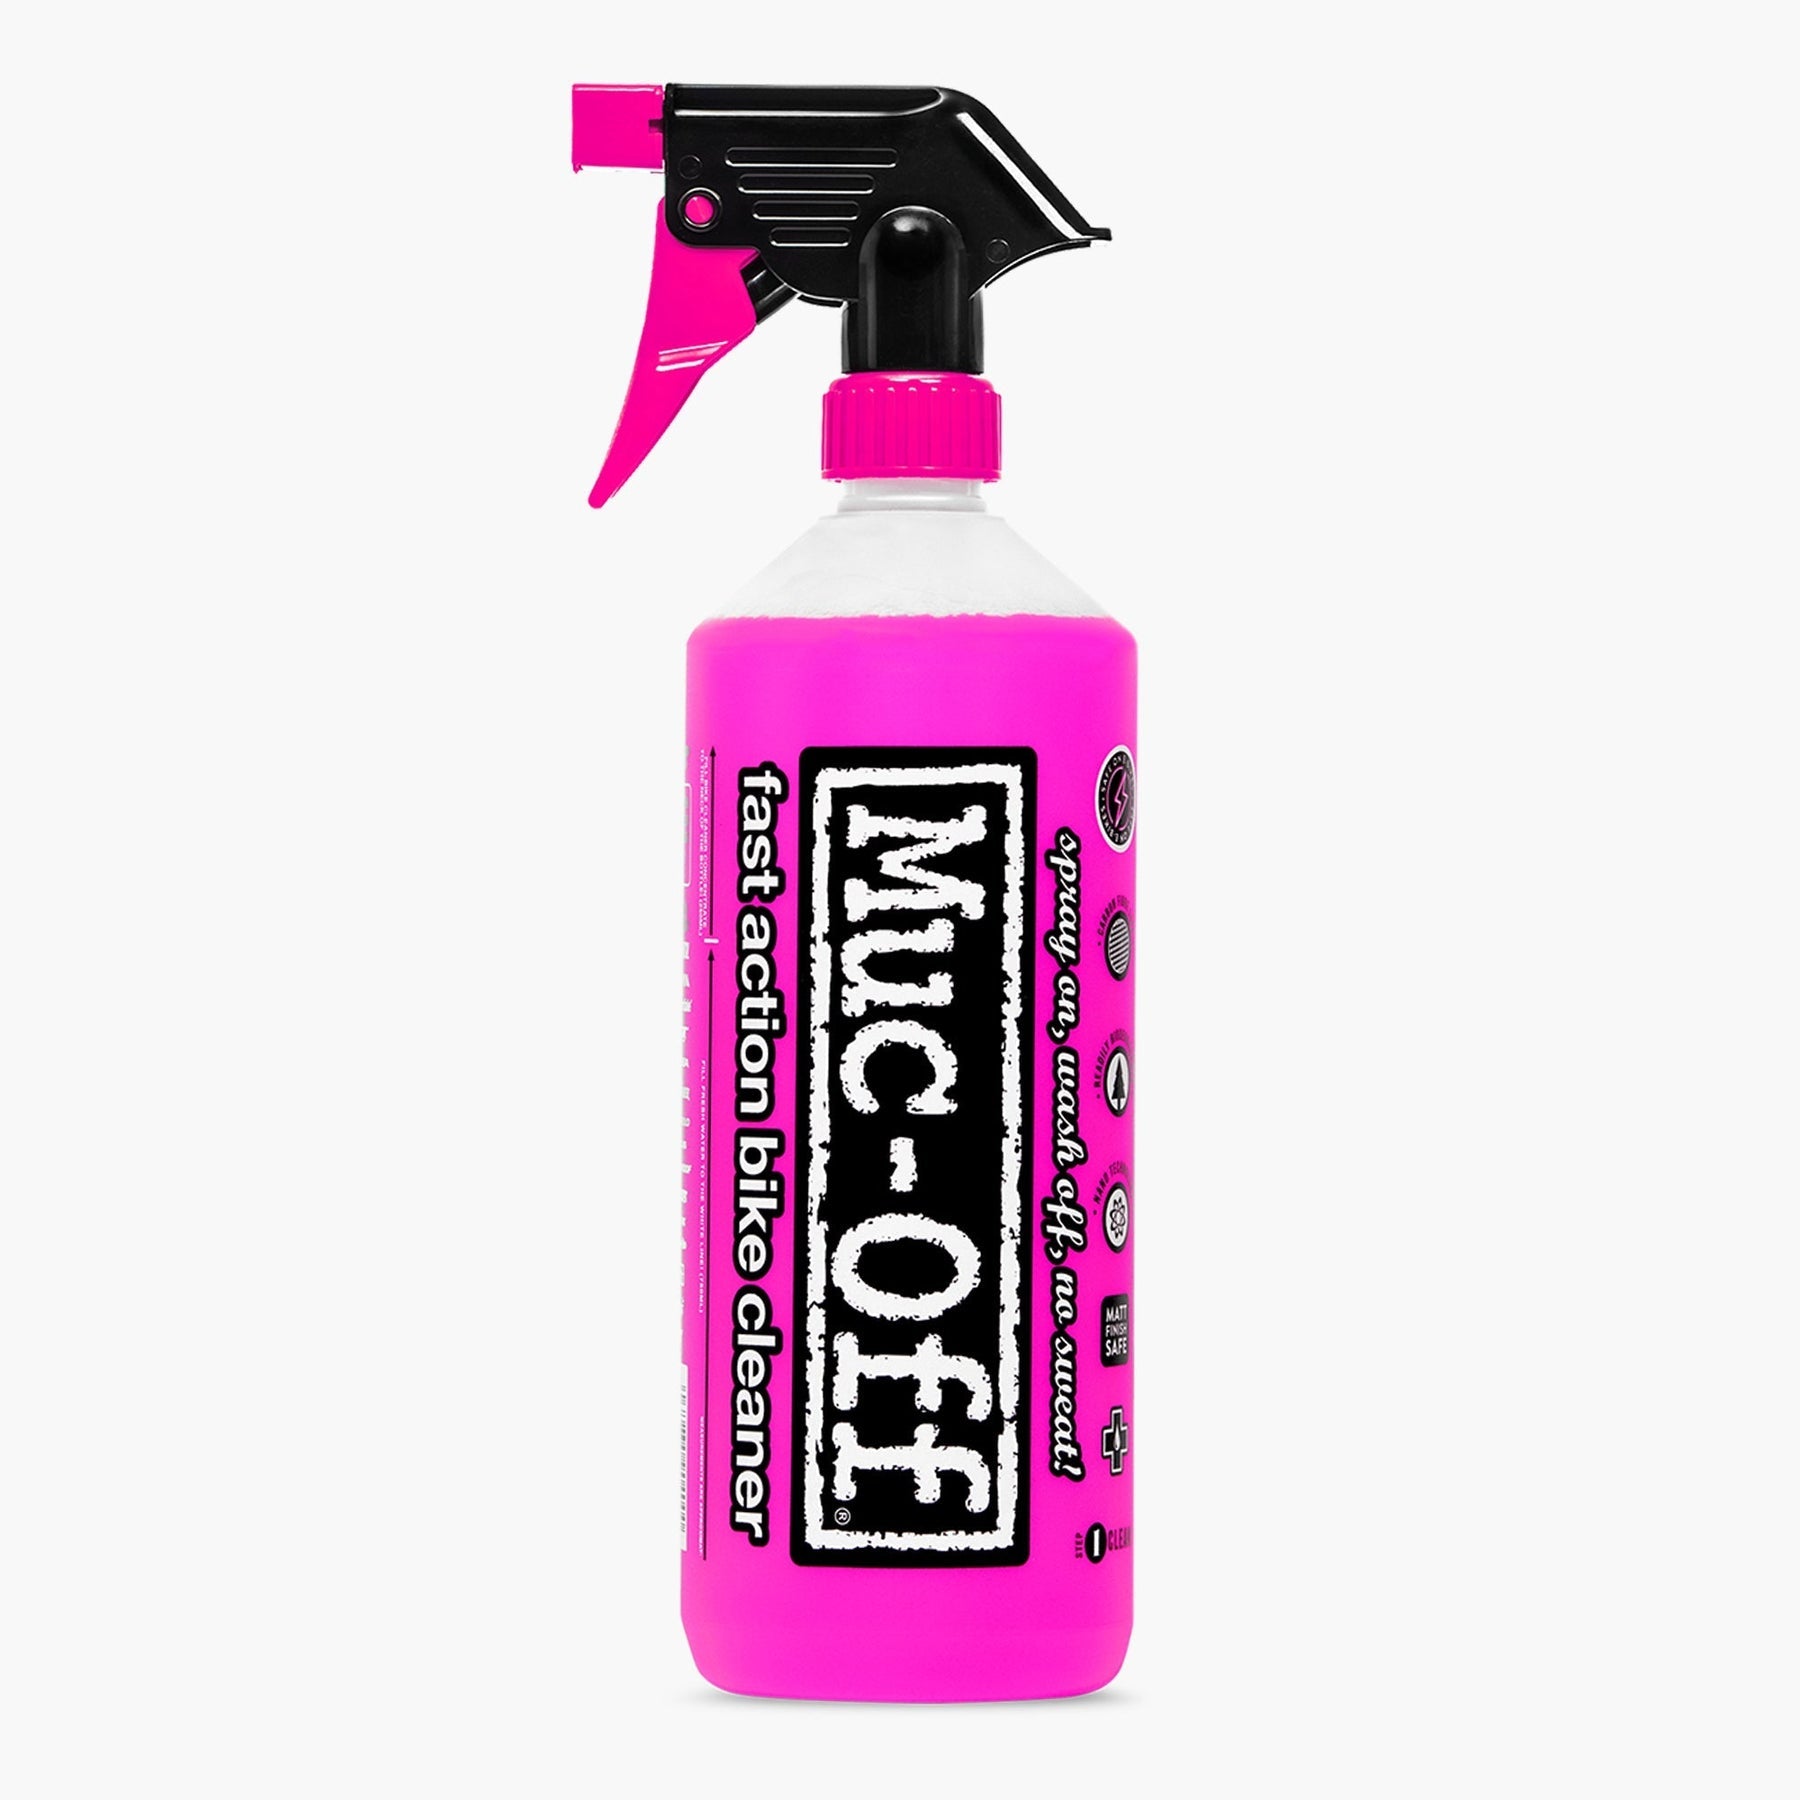 mucoff C nano tech cleaner concentrate 1L